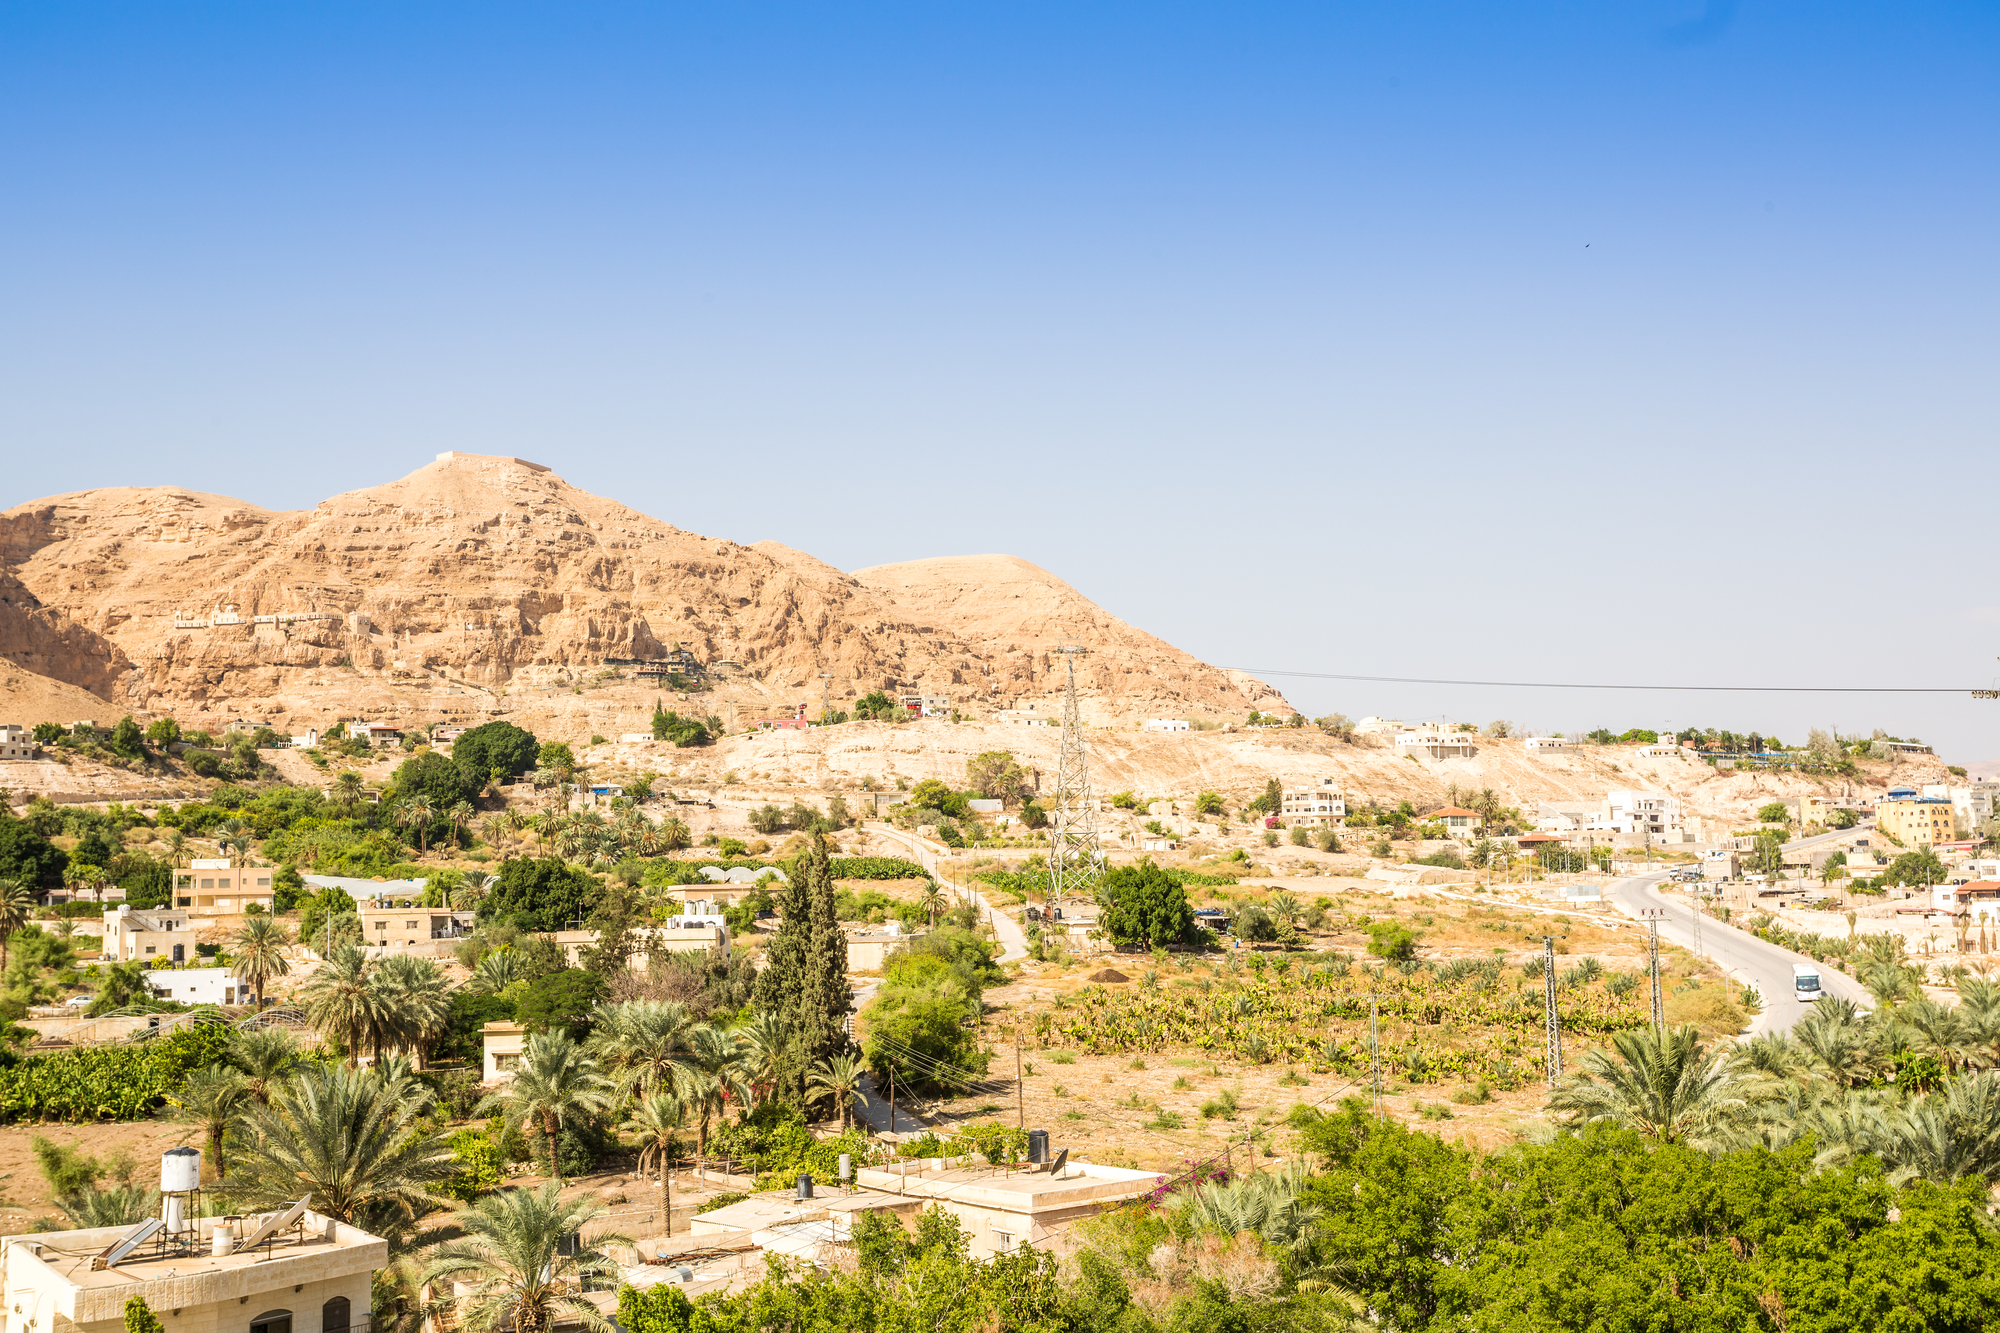 Mount of Temptation next to Jericho - place where Jesus was tempted, Palestinian Autonomy